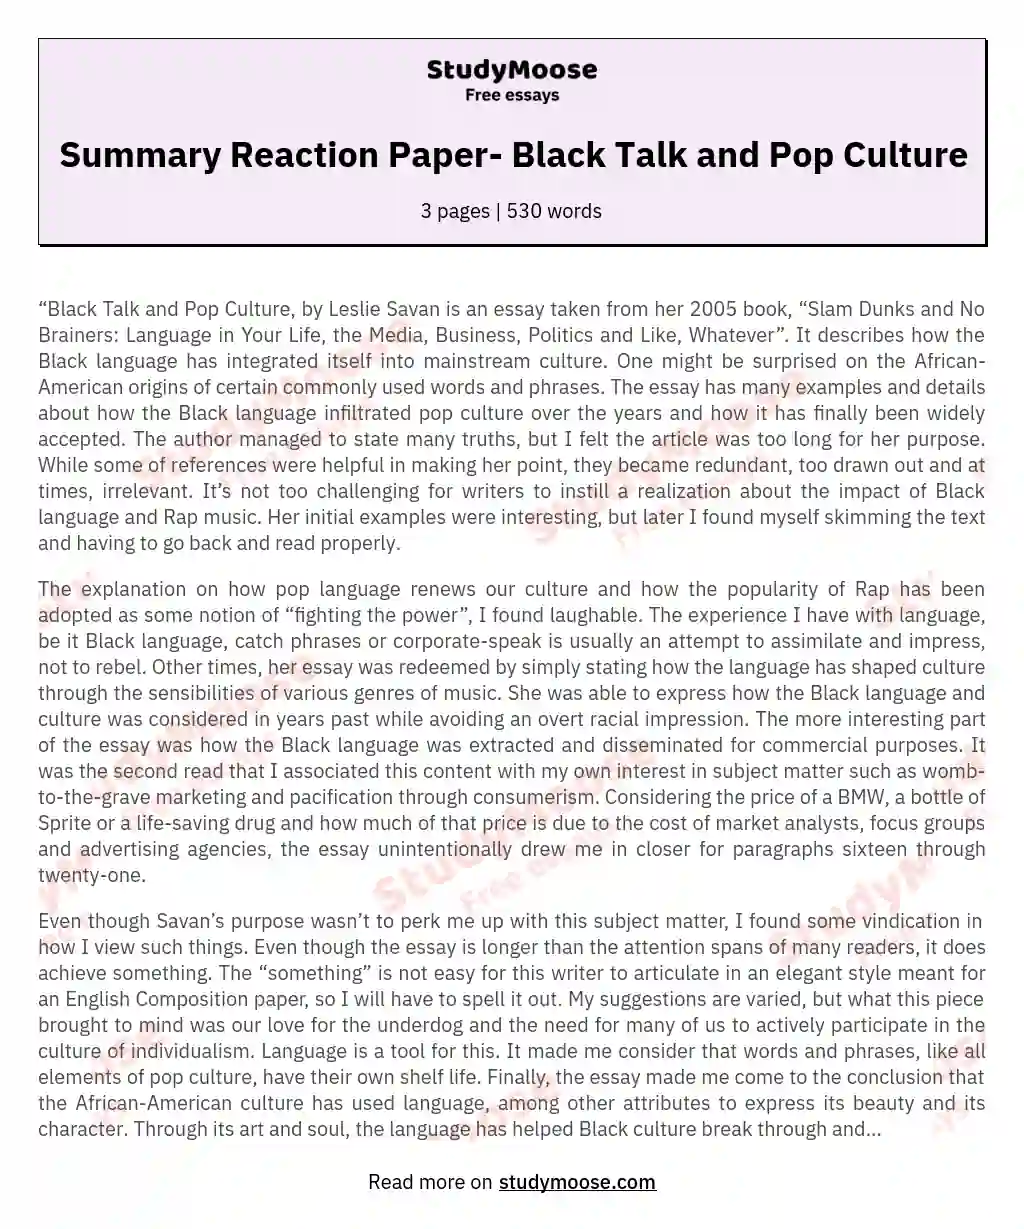 Summary Reaction Paper- Black Talk and Pop Culture essay